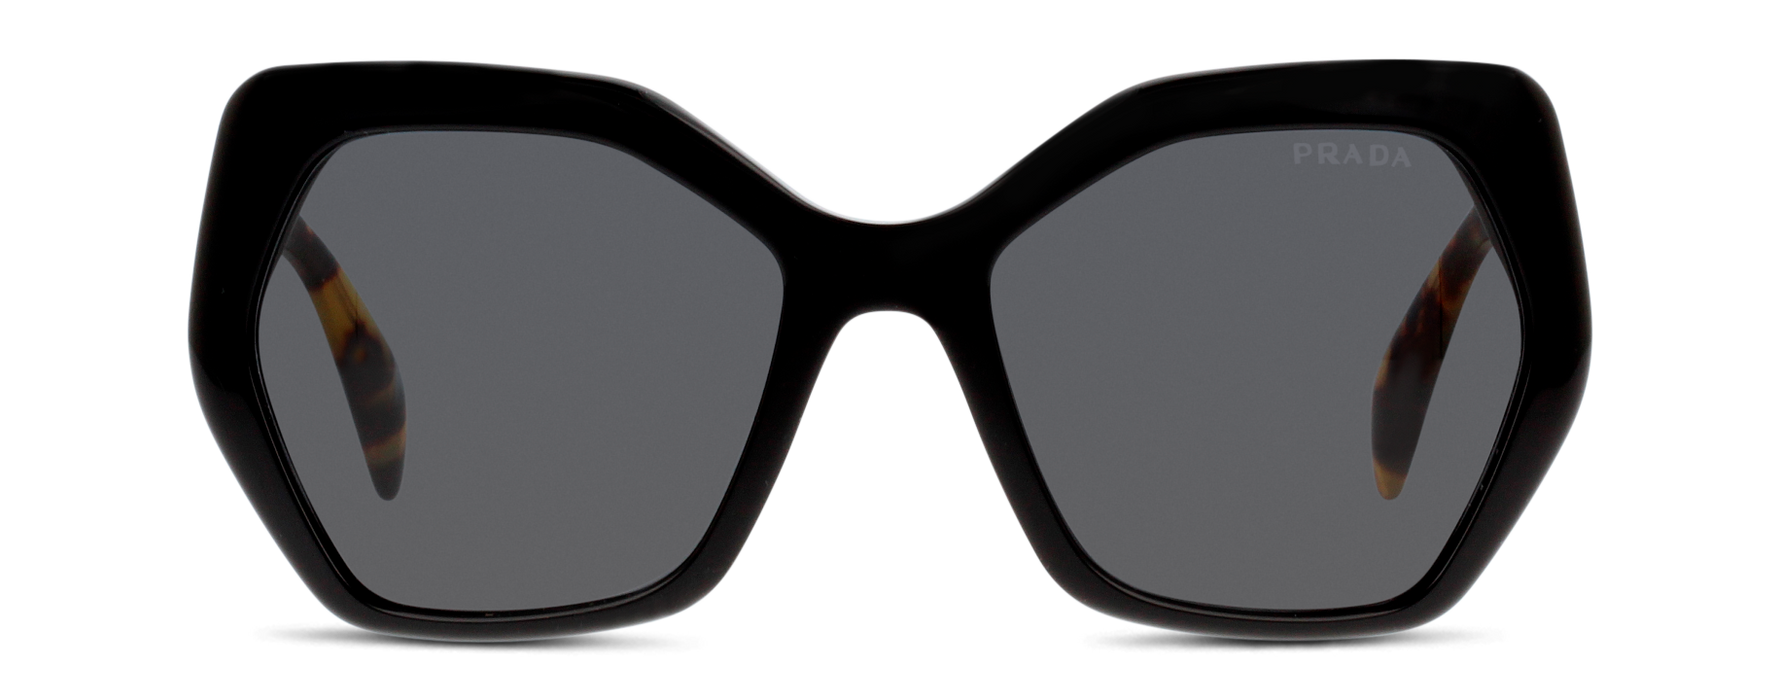 Gafas de Sol Prada 0PR 16RS Unisex Color Negro